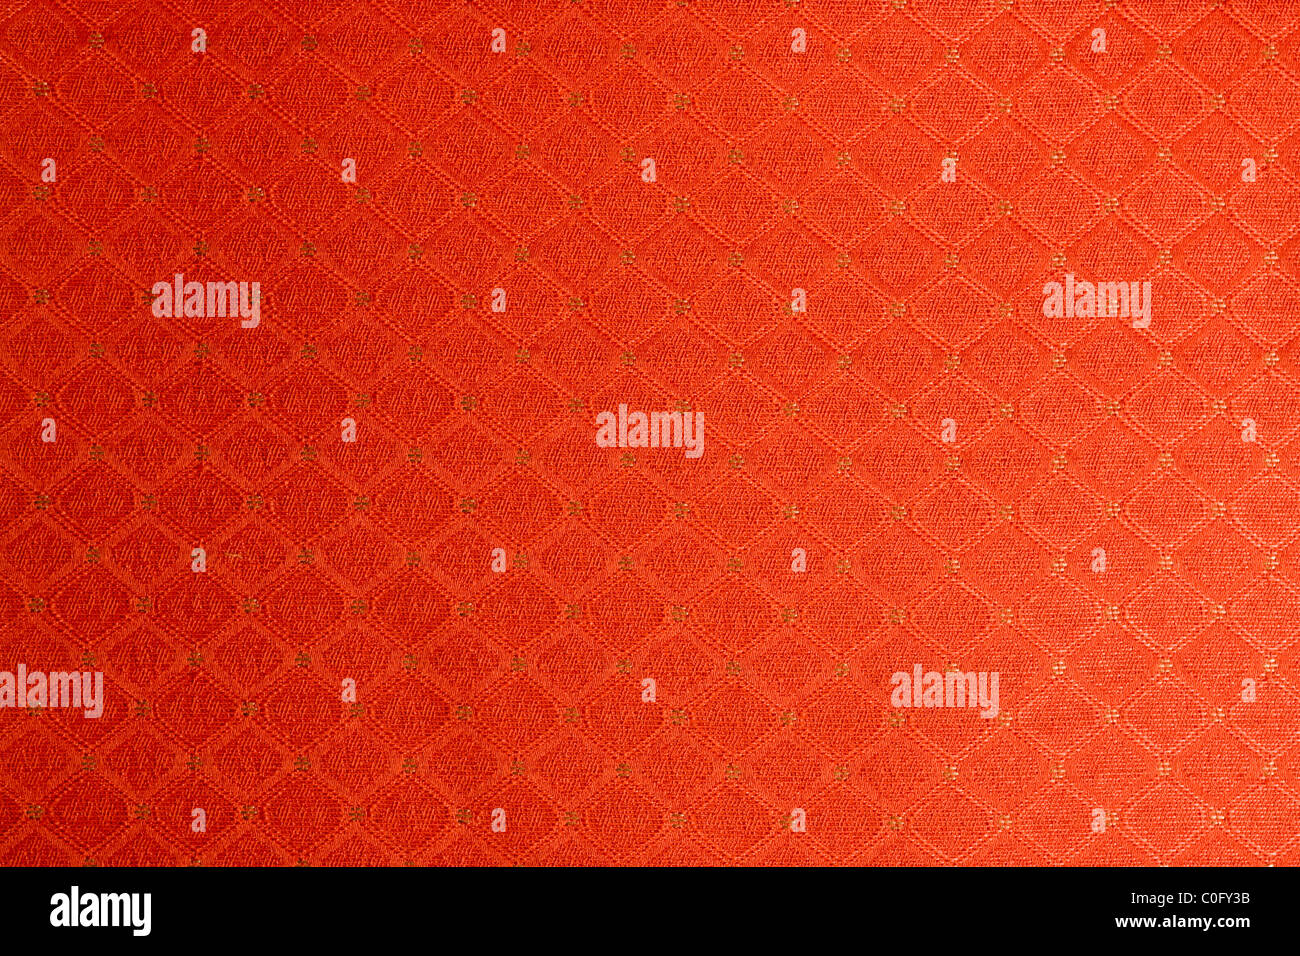 Fabric texture background Stock Photo